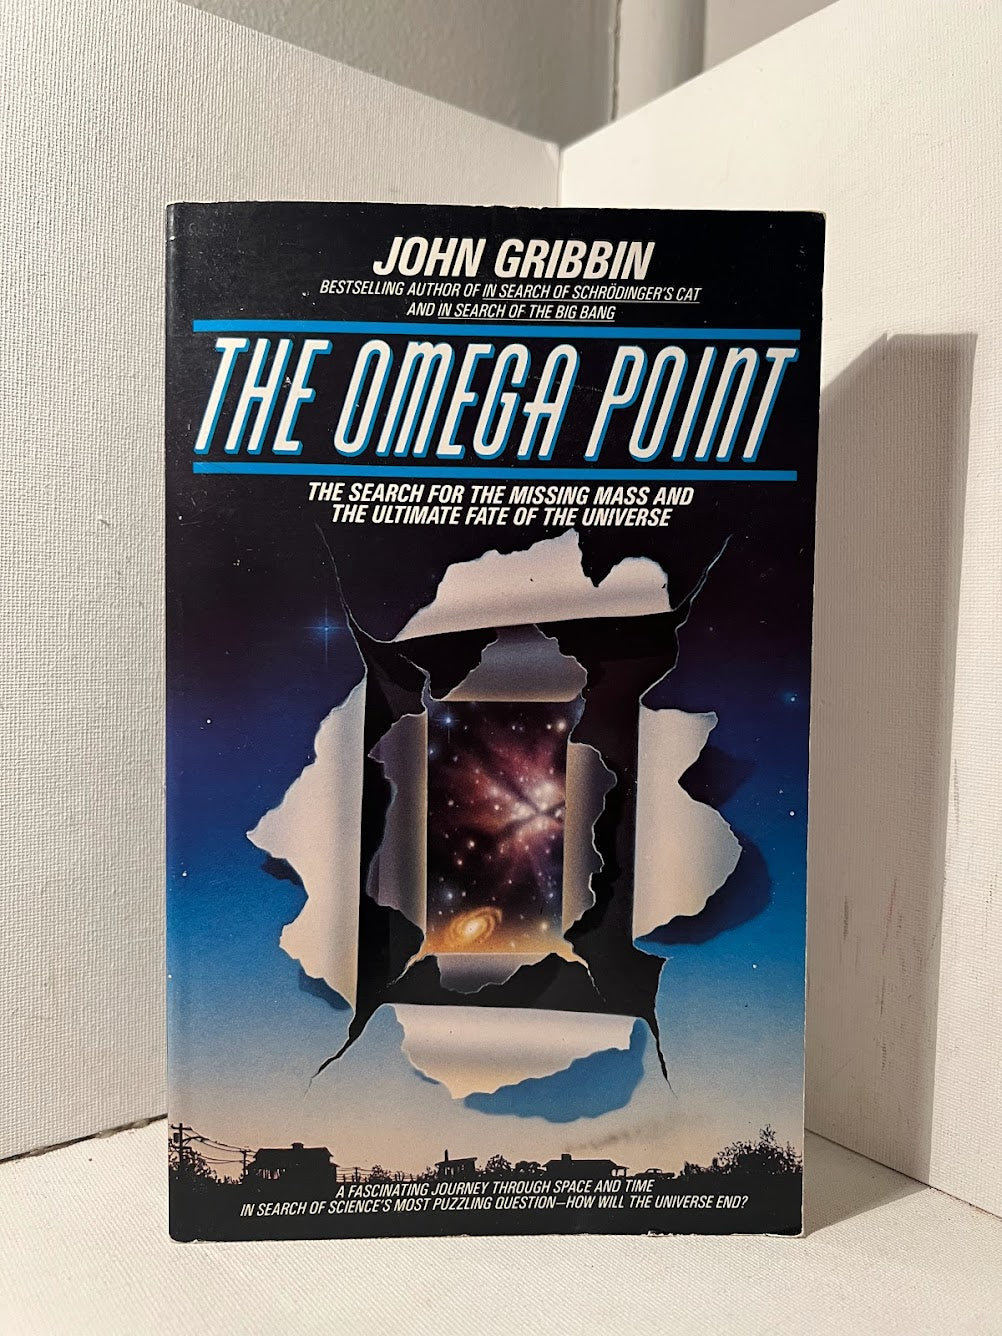 The Omega Point by John Gribbin